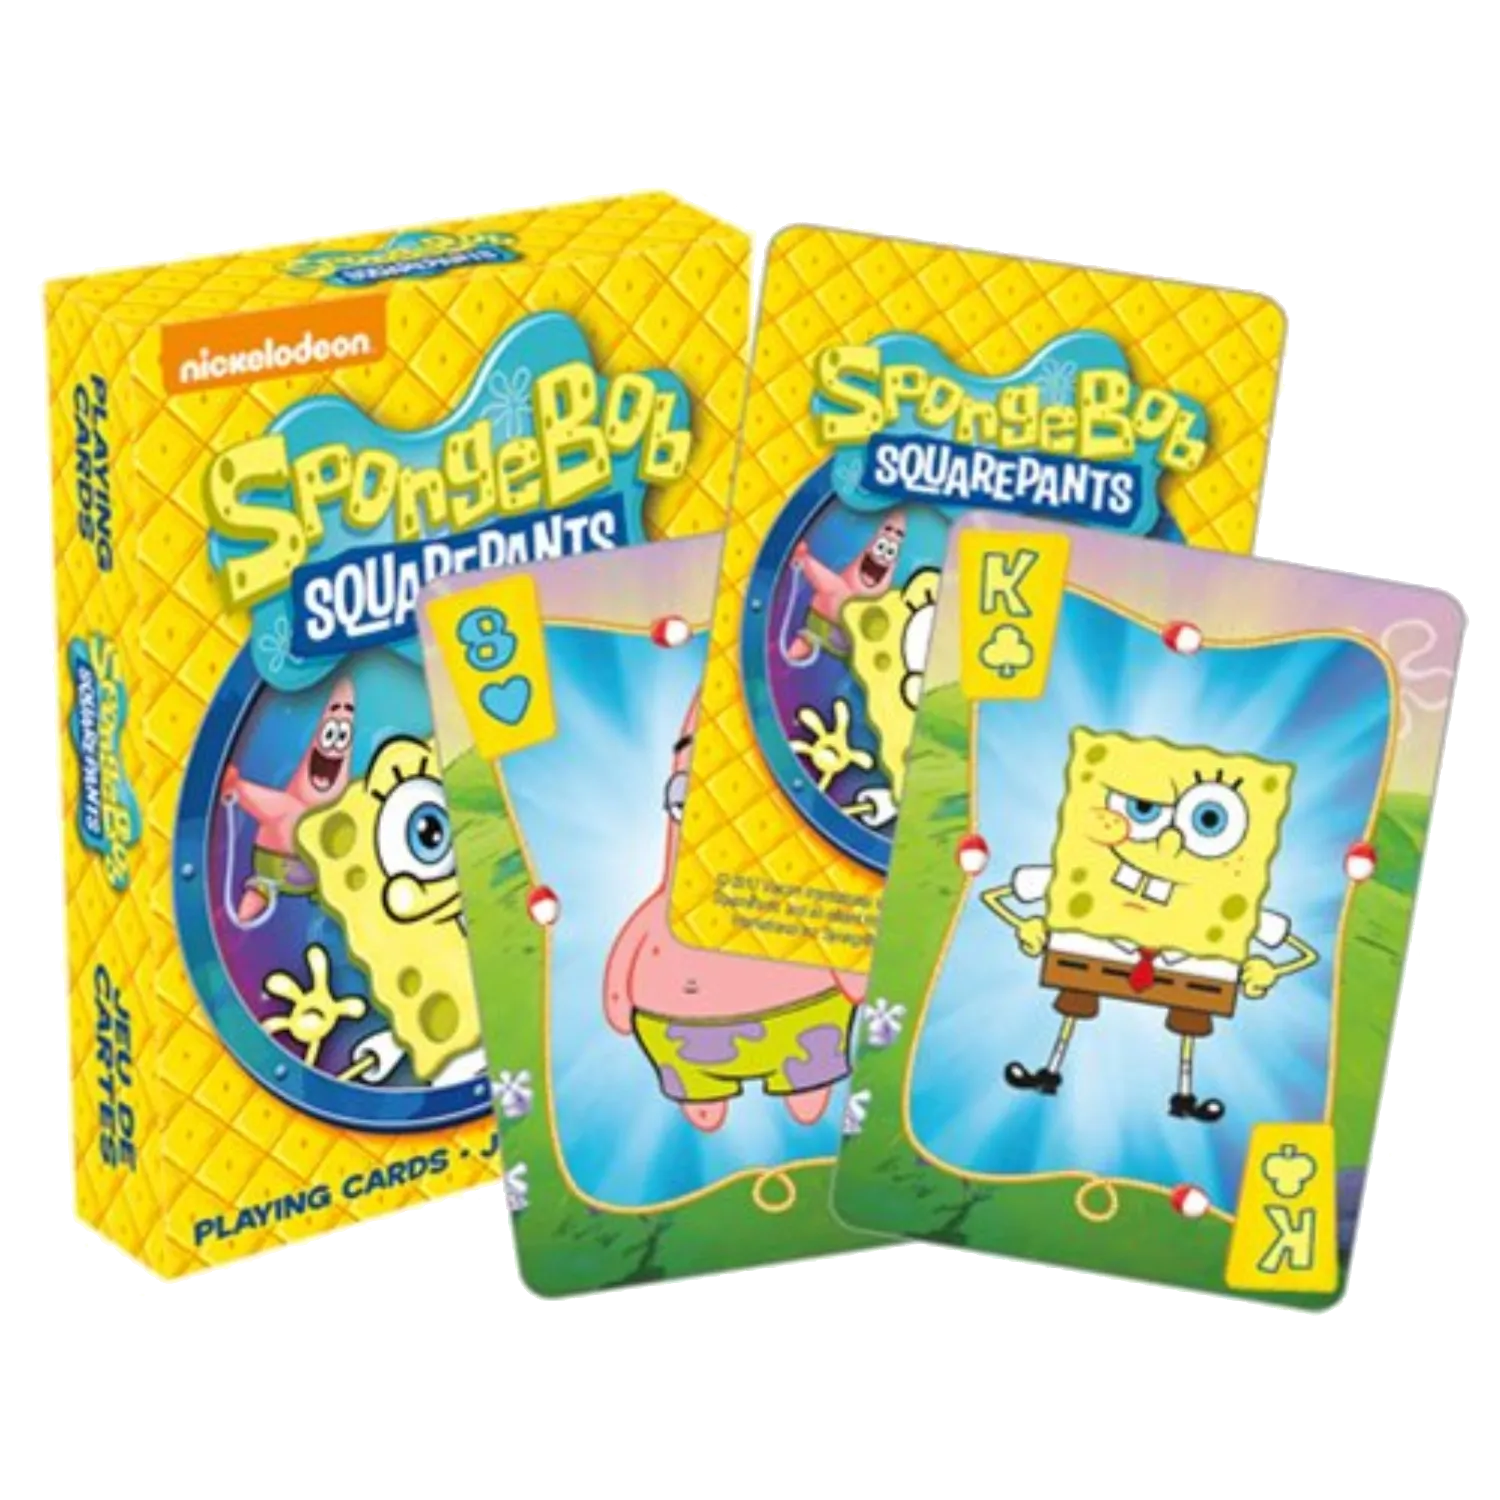 Cartas de juego de SpongeBob SquarePants